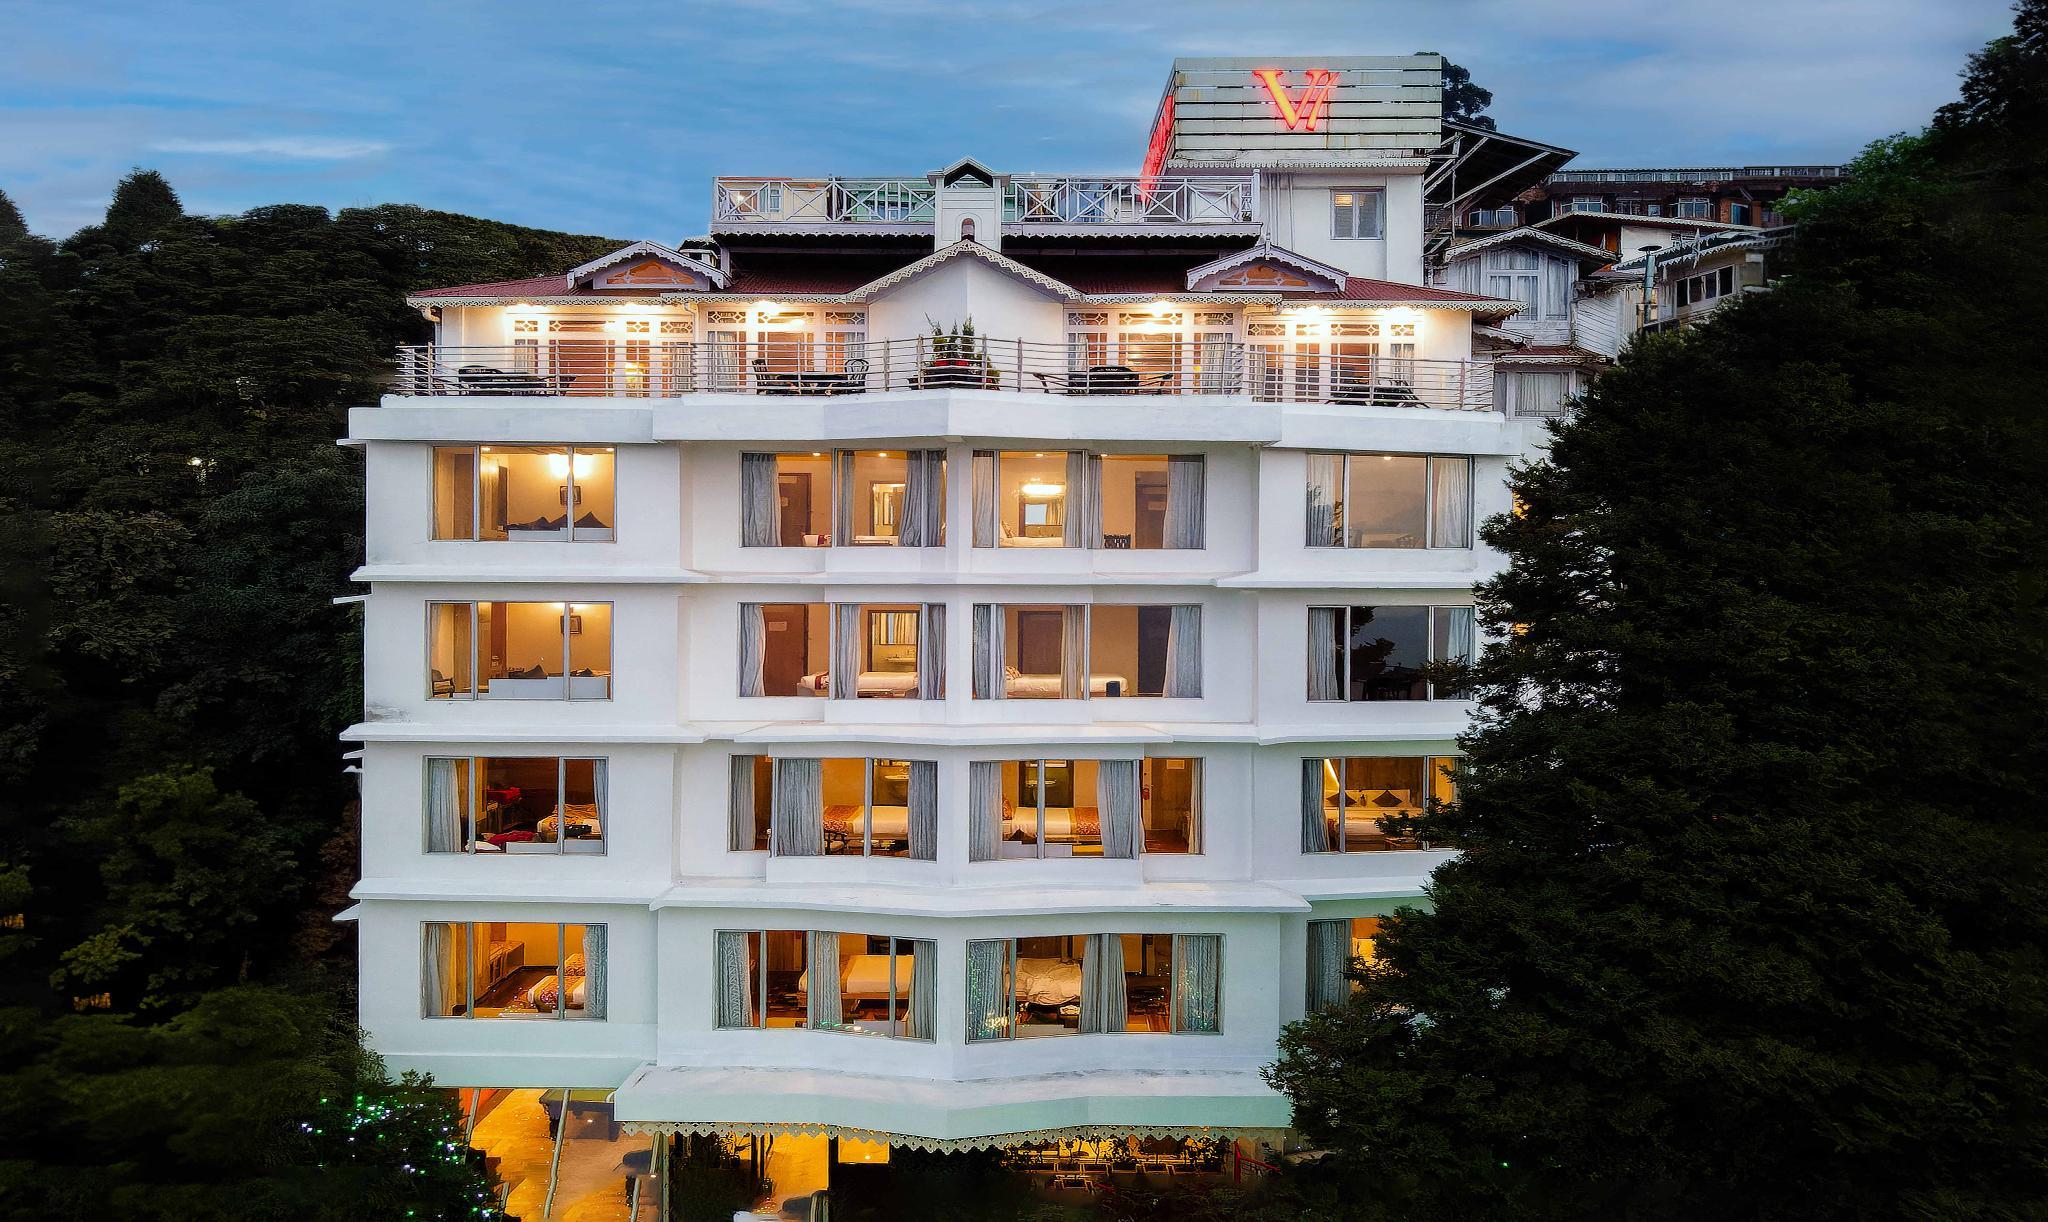 Viceroy Hotel - Darjeeling